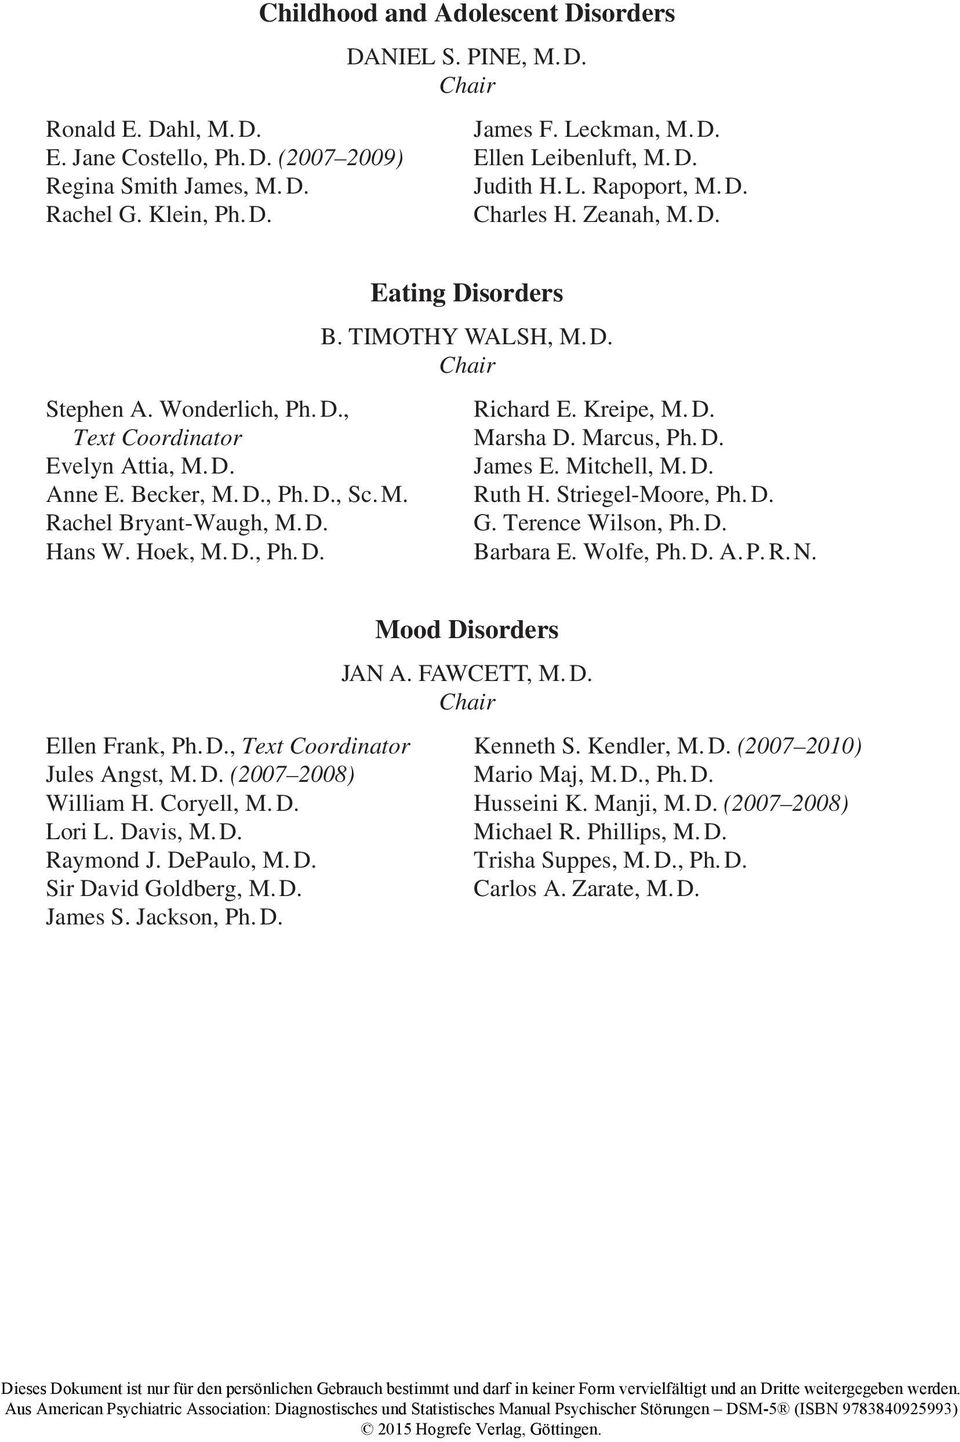 Hoek, M. D., Ph. D. Eating Disorders B. TIMOTHY WALSH, M. D. Richard E. Kreipe, M. D. Marsha D. Marcus, Ph. D. James E. Mitchell, M. D. Ruth H. Striegel-Moore, Ph. D. G. Terence Wilson, Ph. D. Barbara E.